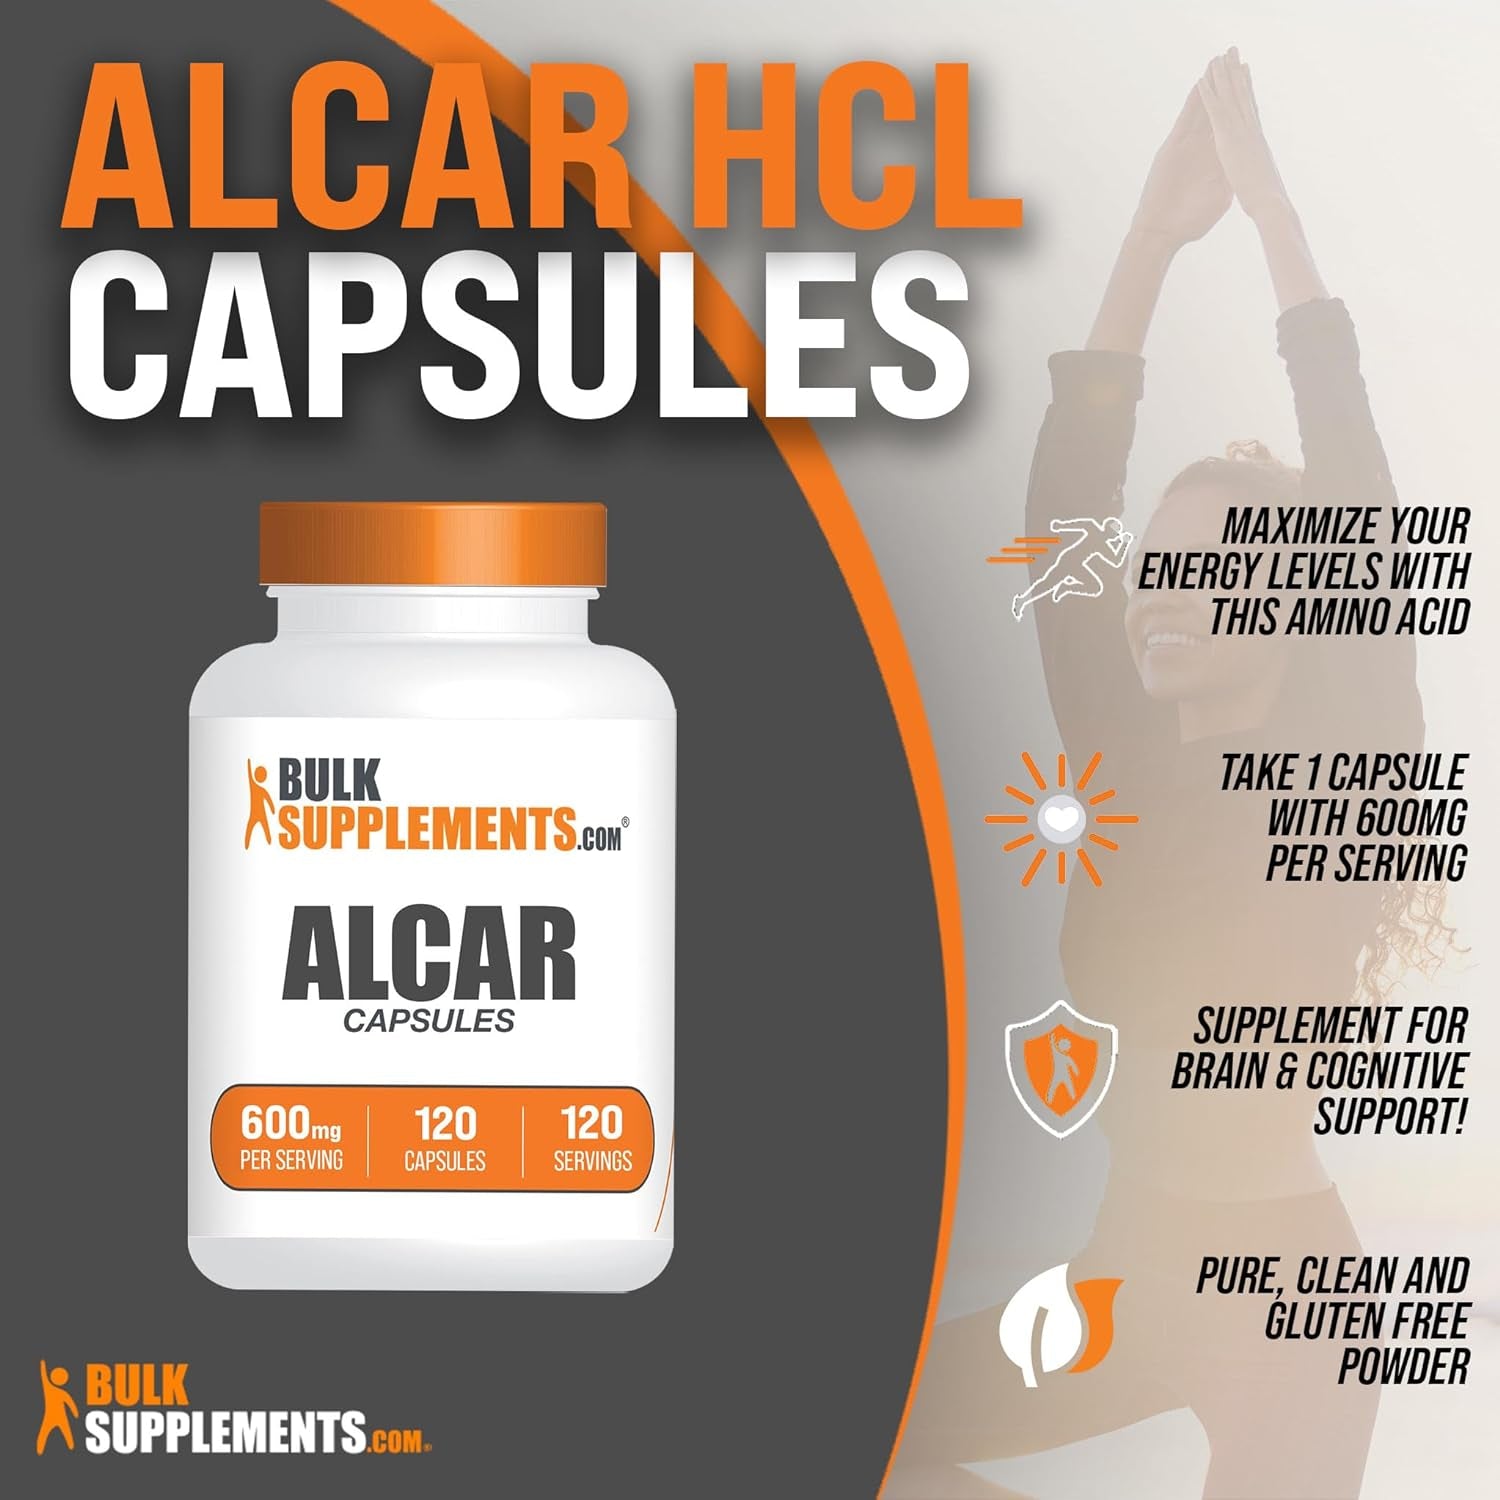 BULKSUPPLEMENTS.COM Acetyl L-Carnitine Capsules - ALCAR Hcl, Carnitine Supplement, ALCAR 600Mg - Acetyl-L-Carnitine, ALCAR Capsules - Gluten Free, 1 Capsule per Serving, 120 Capsules